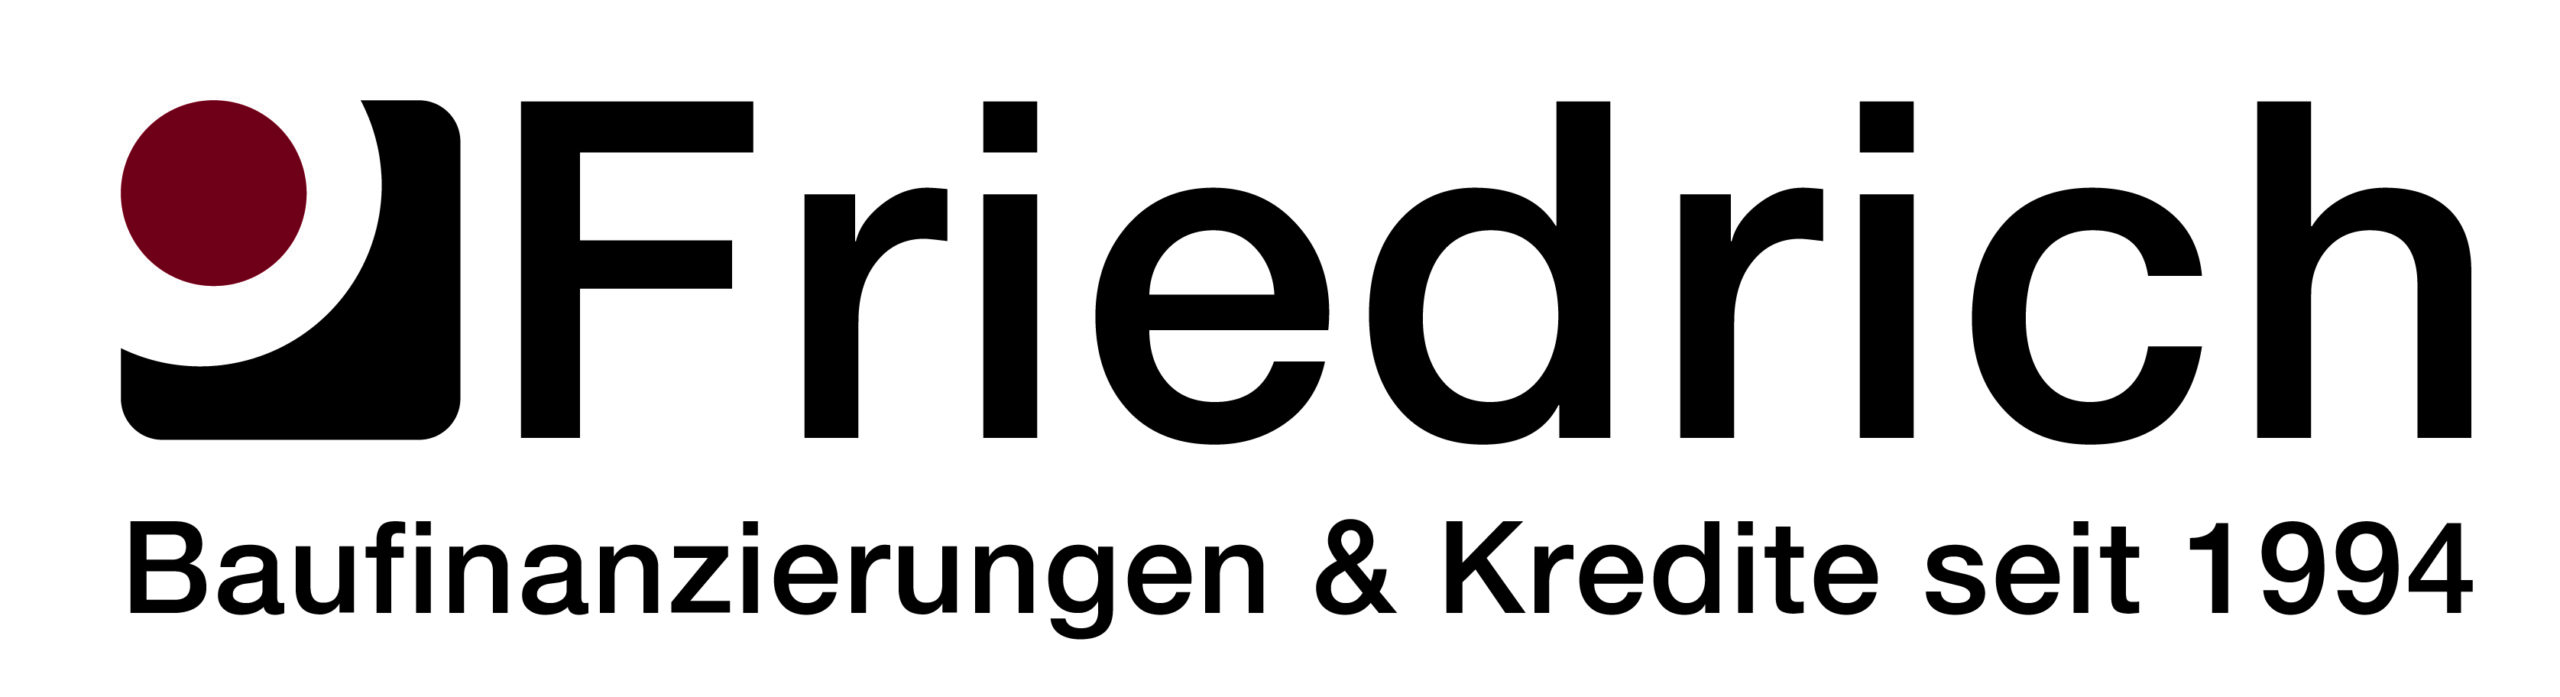 Thomas Friedrich Logo